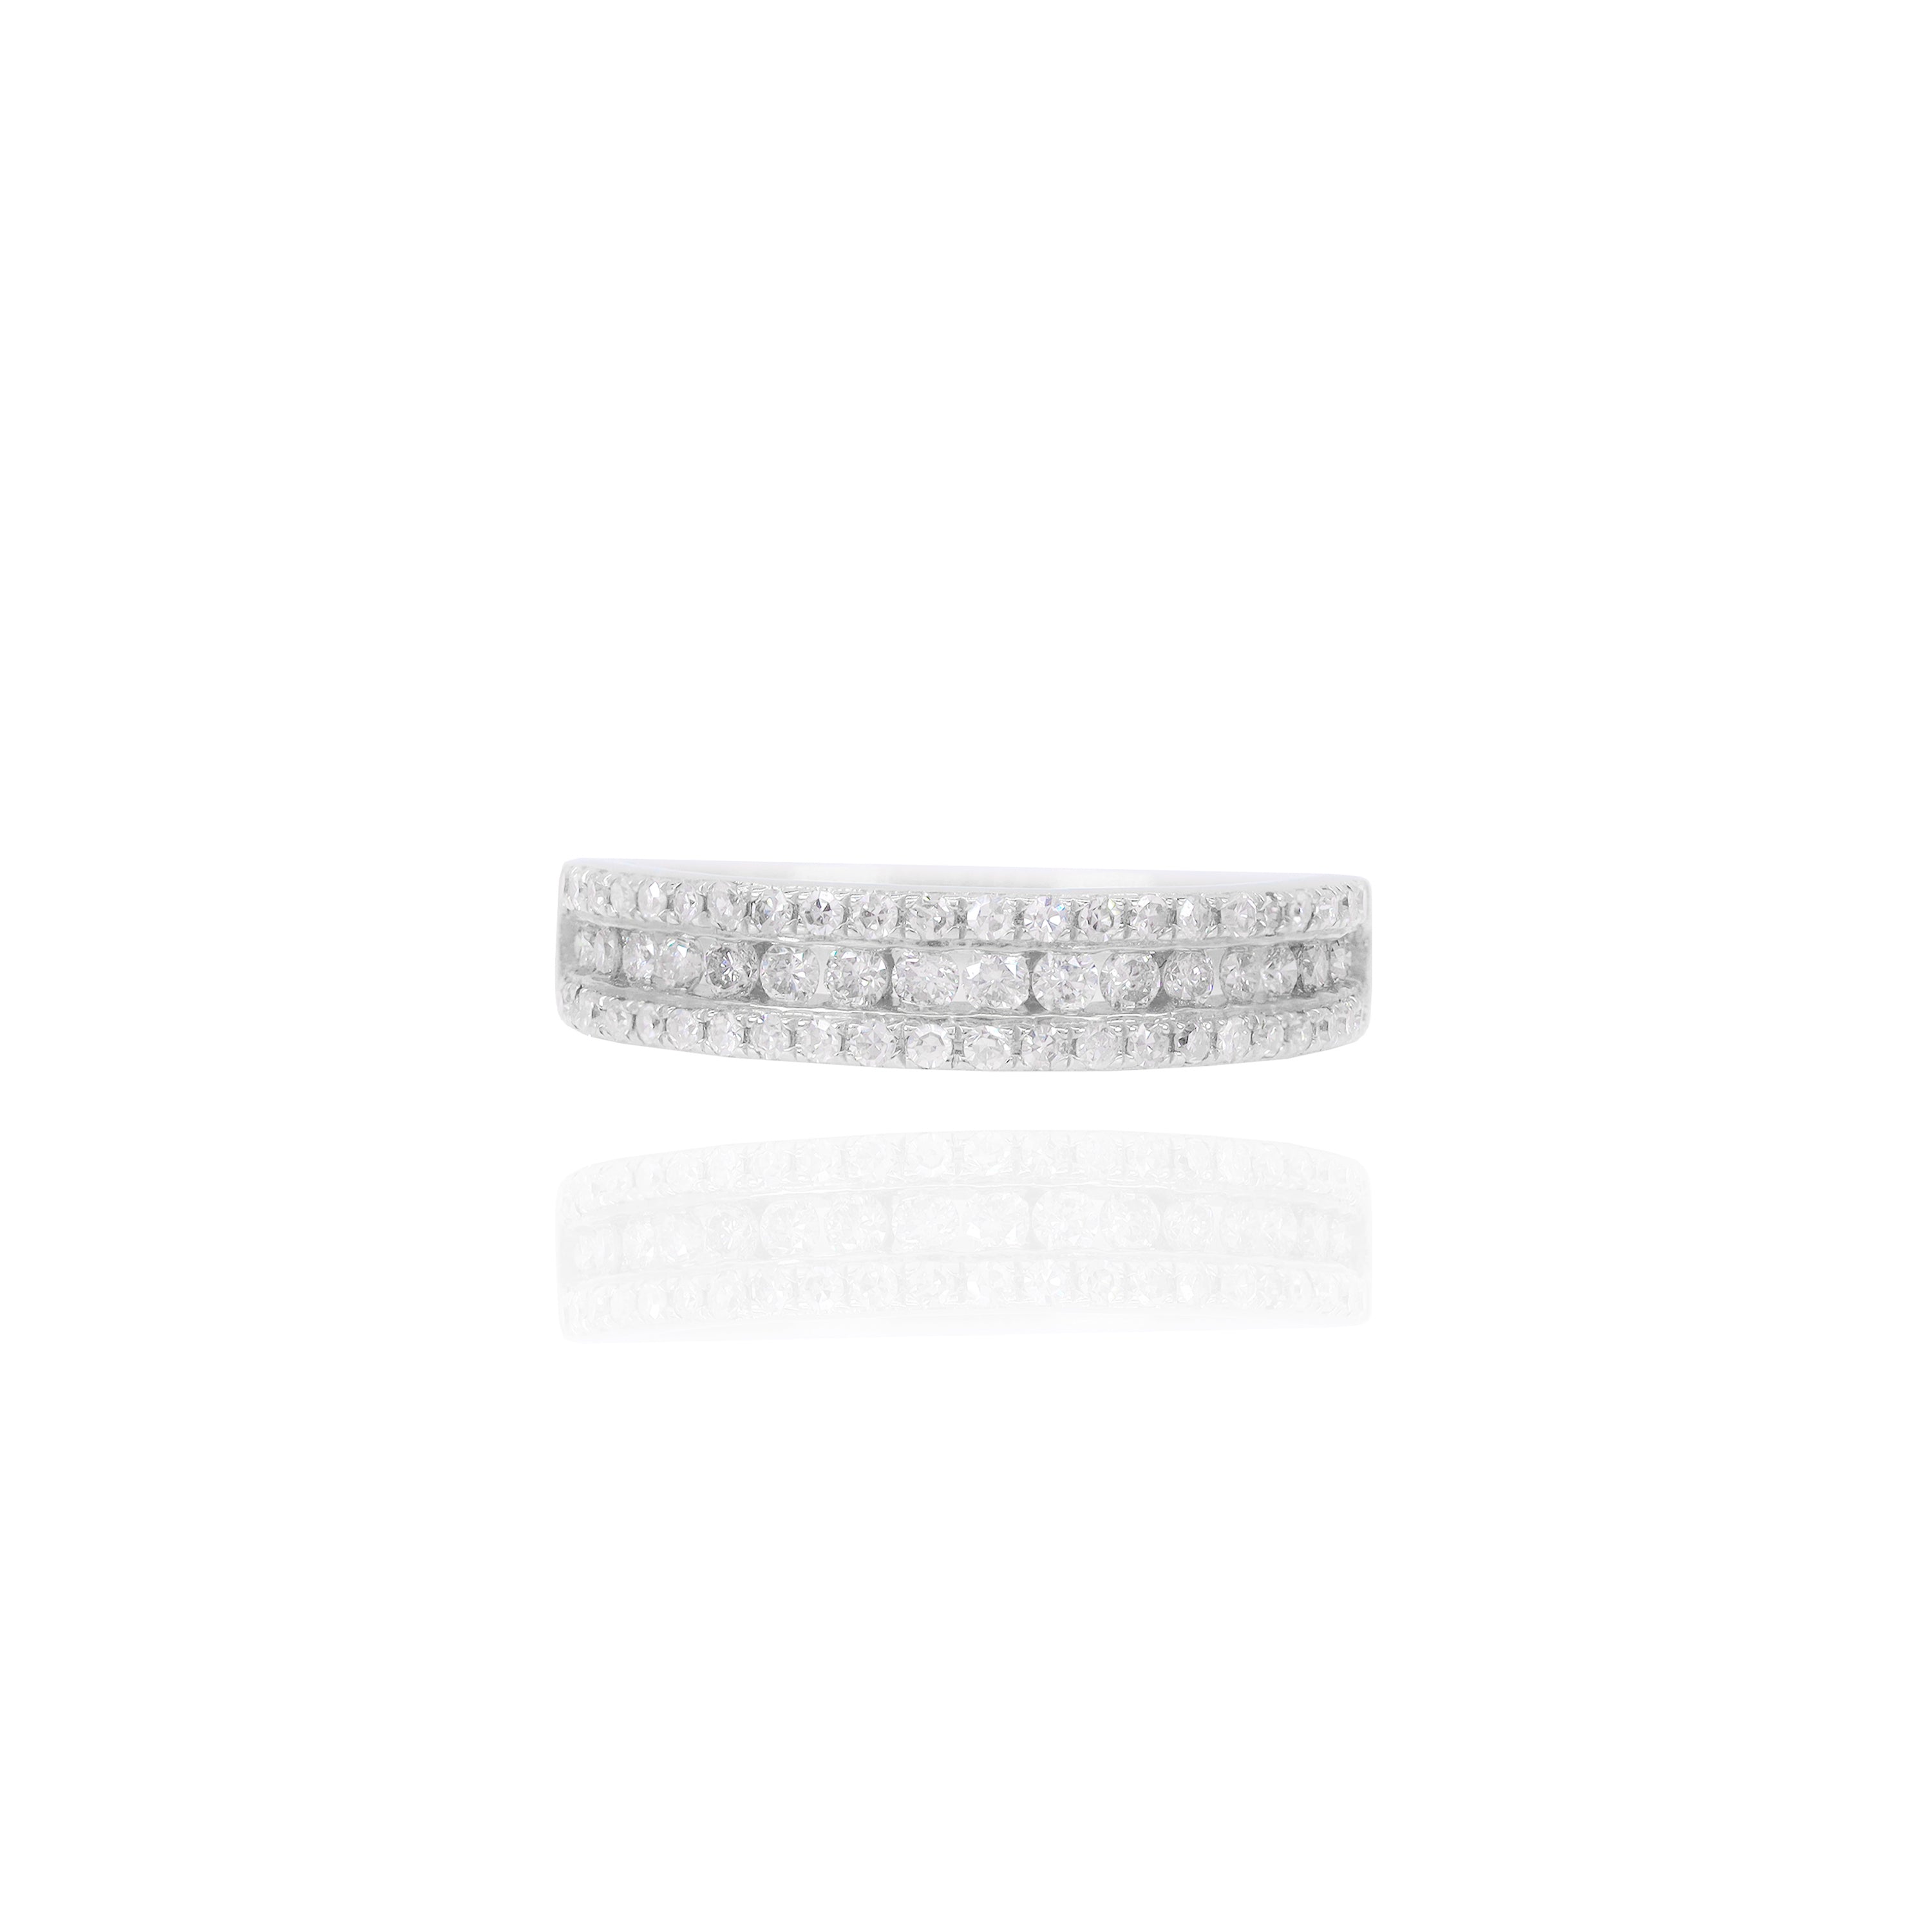 Pear Shaped Diamond Engagement Ring & Band